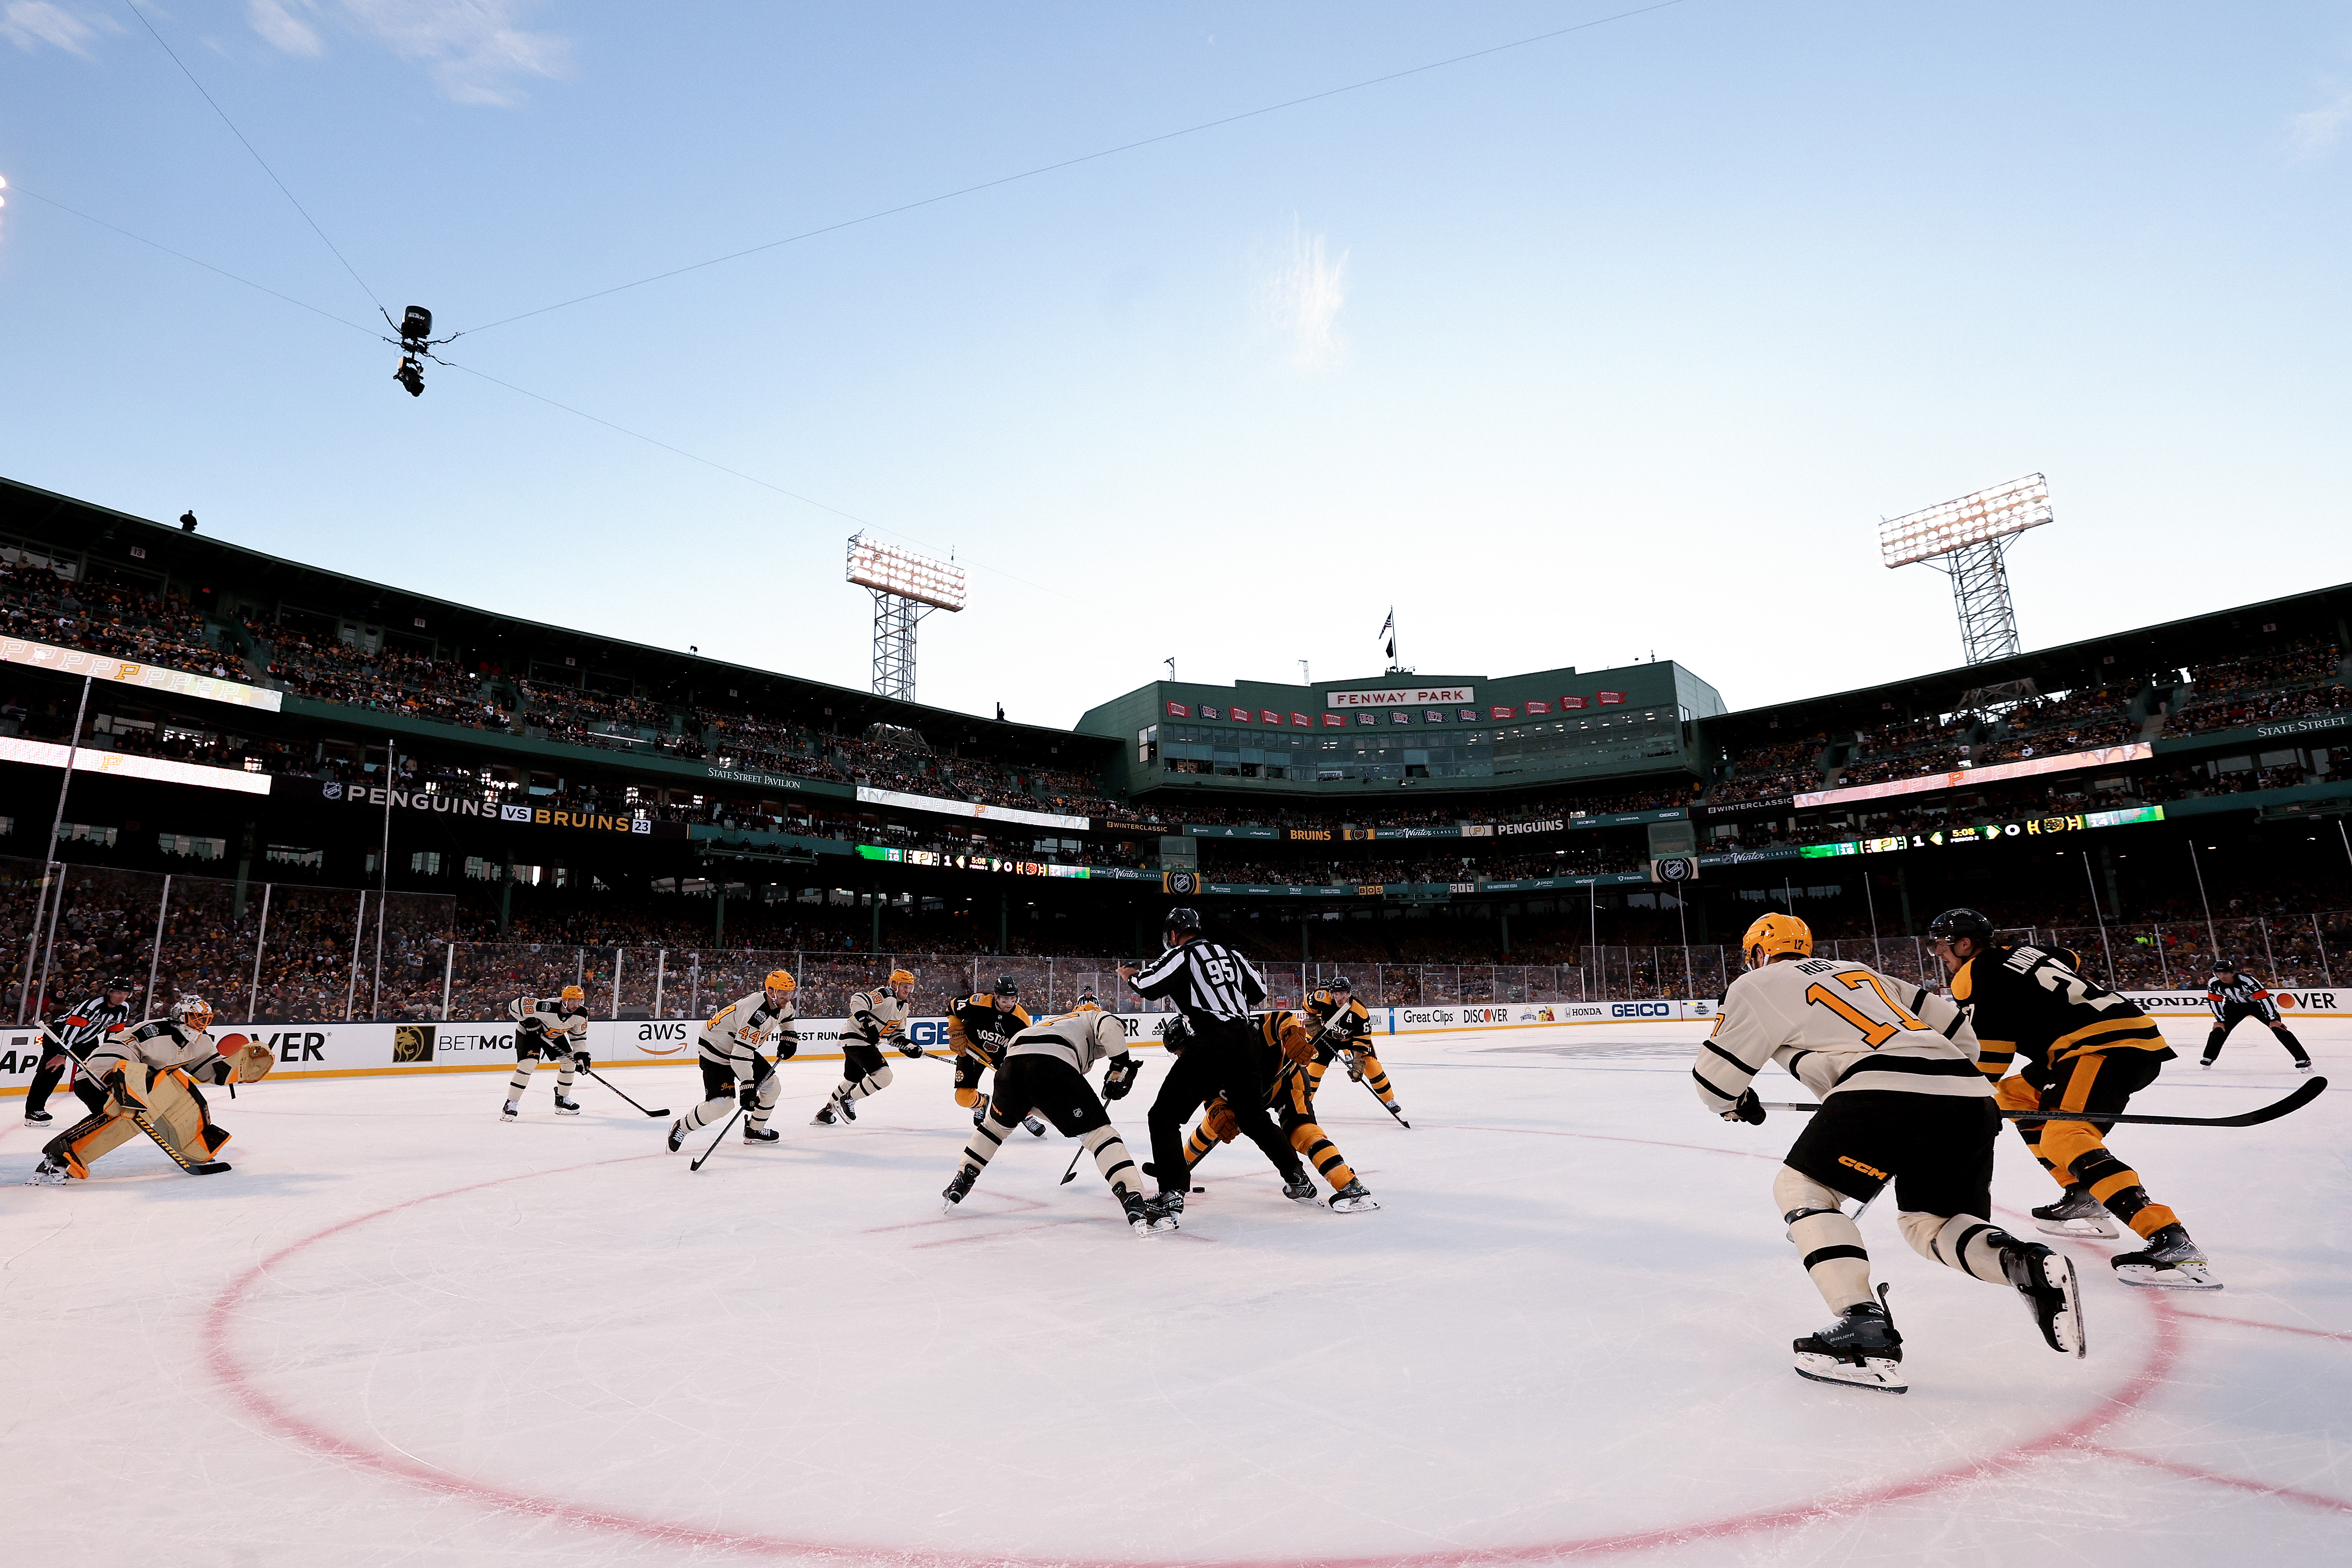 Fenway Park hosts Winter Classic (PHOTOS) - Boston Business Journal